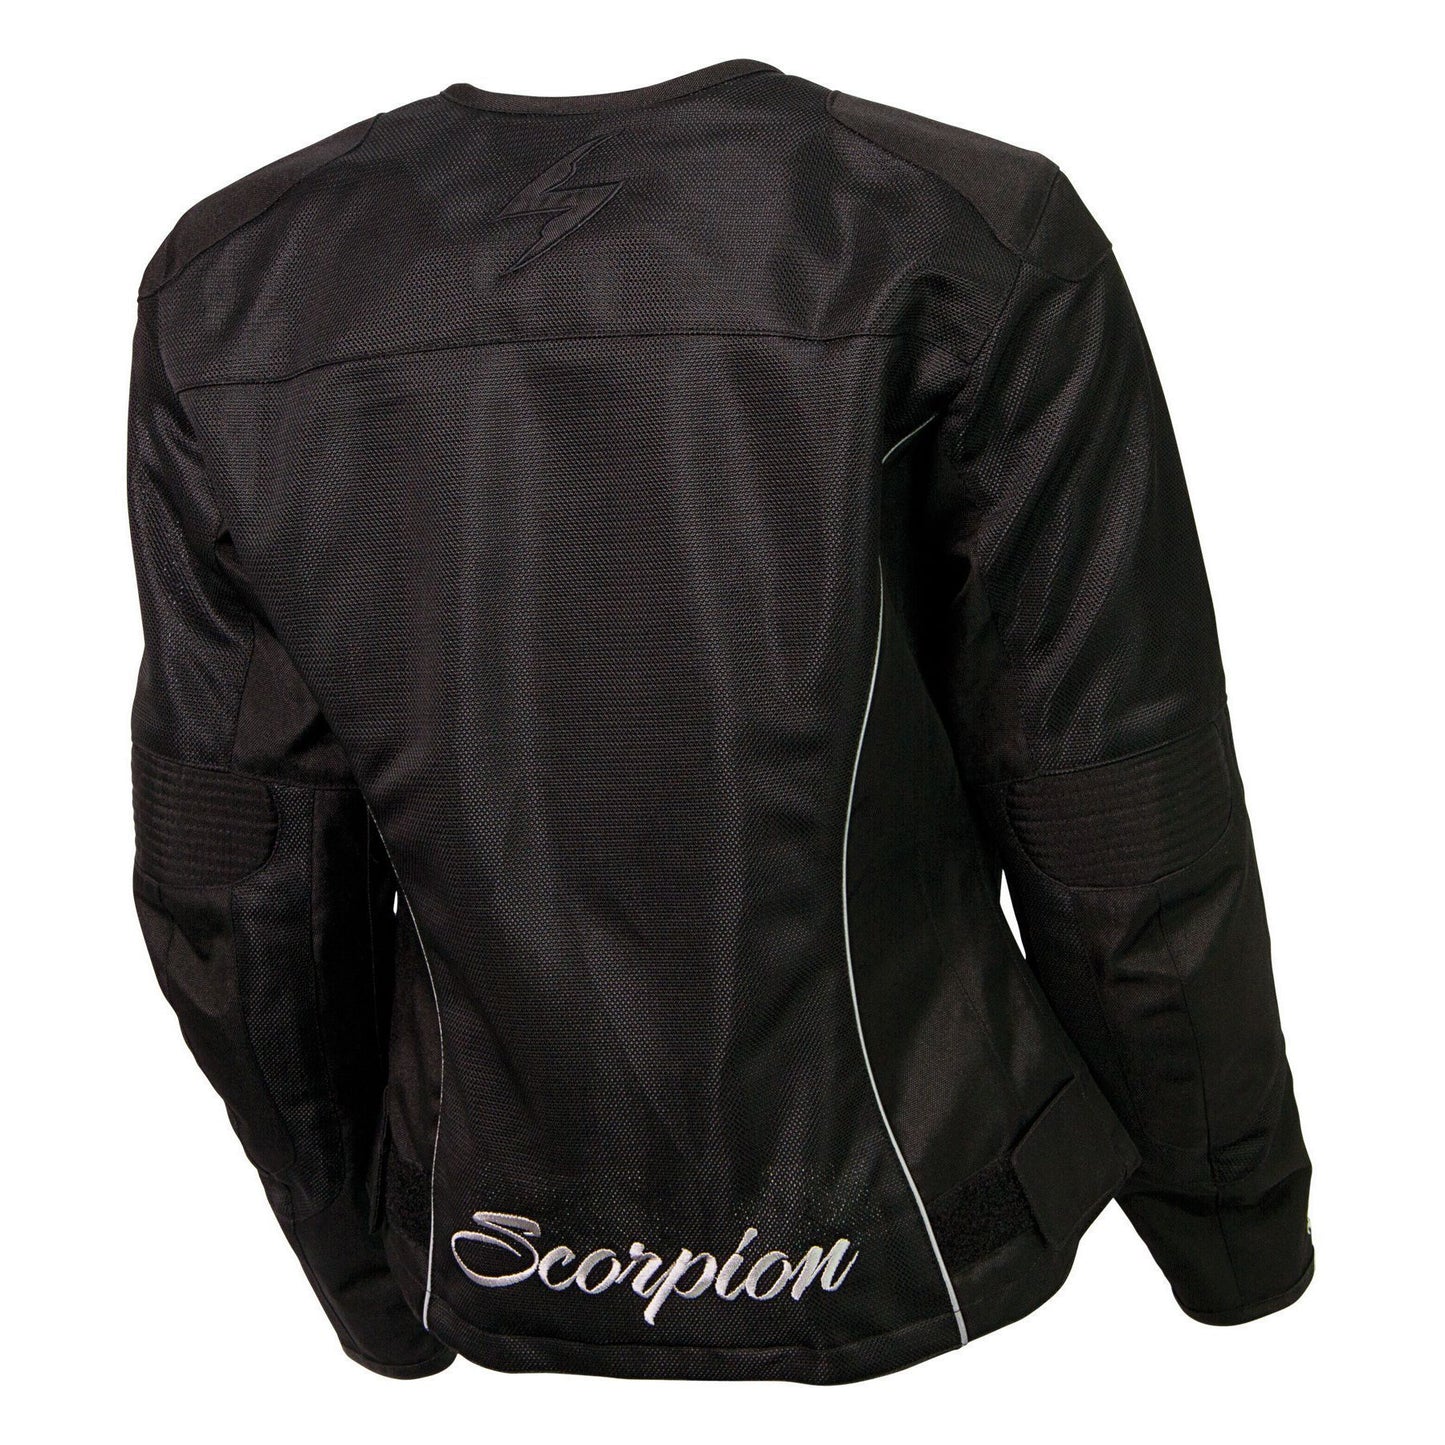 Scorpion Verano Women's Black Mesh Armored Jacket